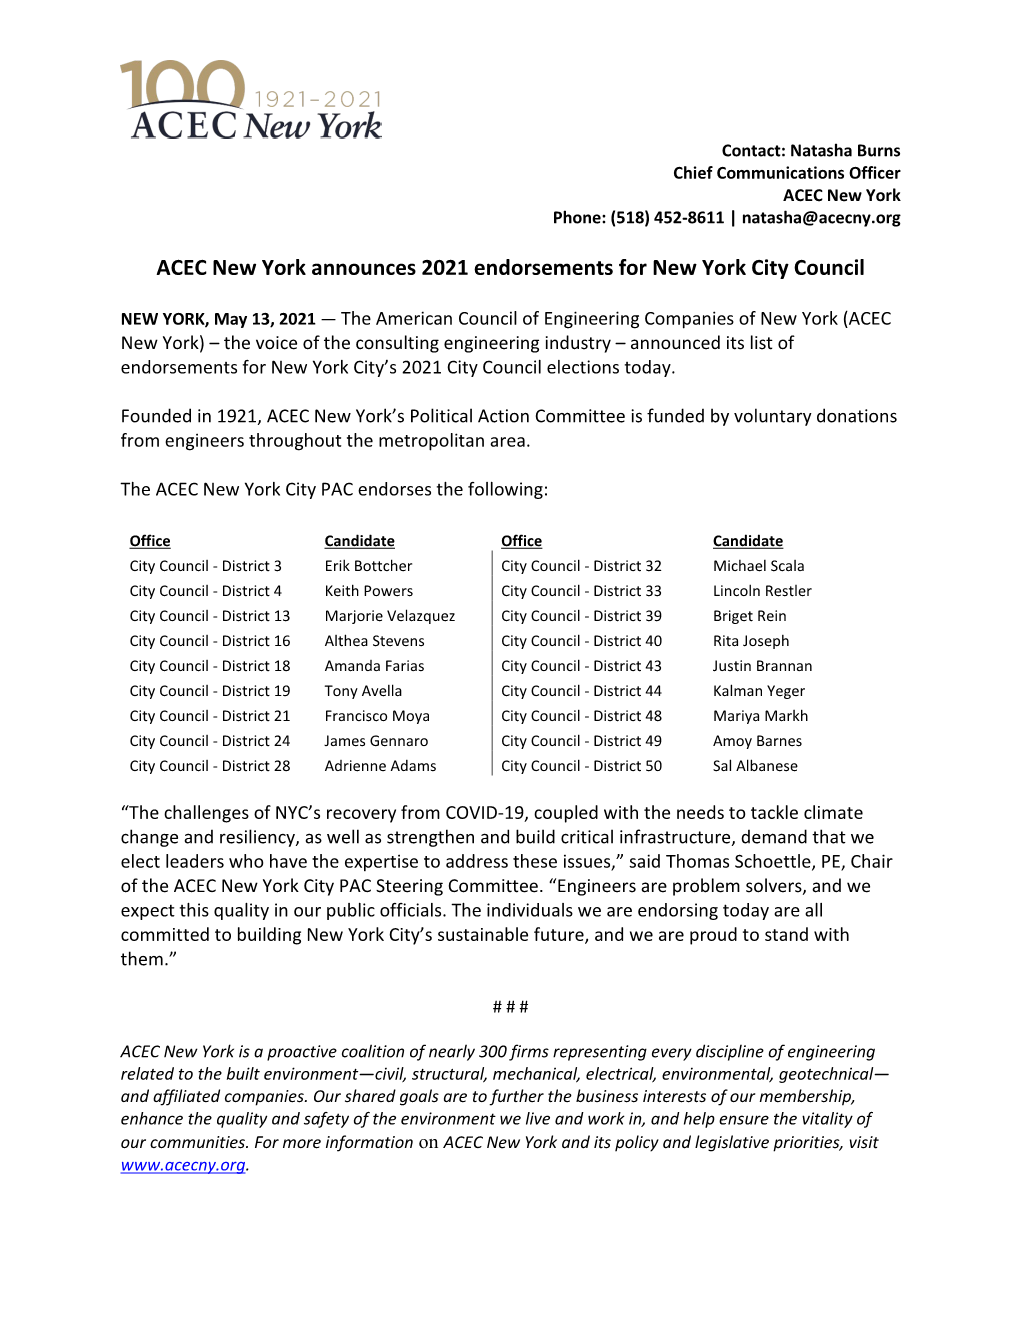 ACEC New York Announces 2021 Endorsements for New York City Council